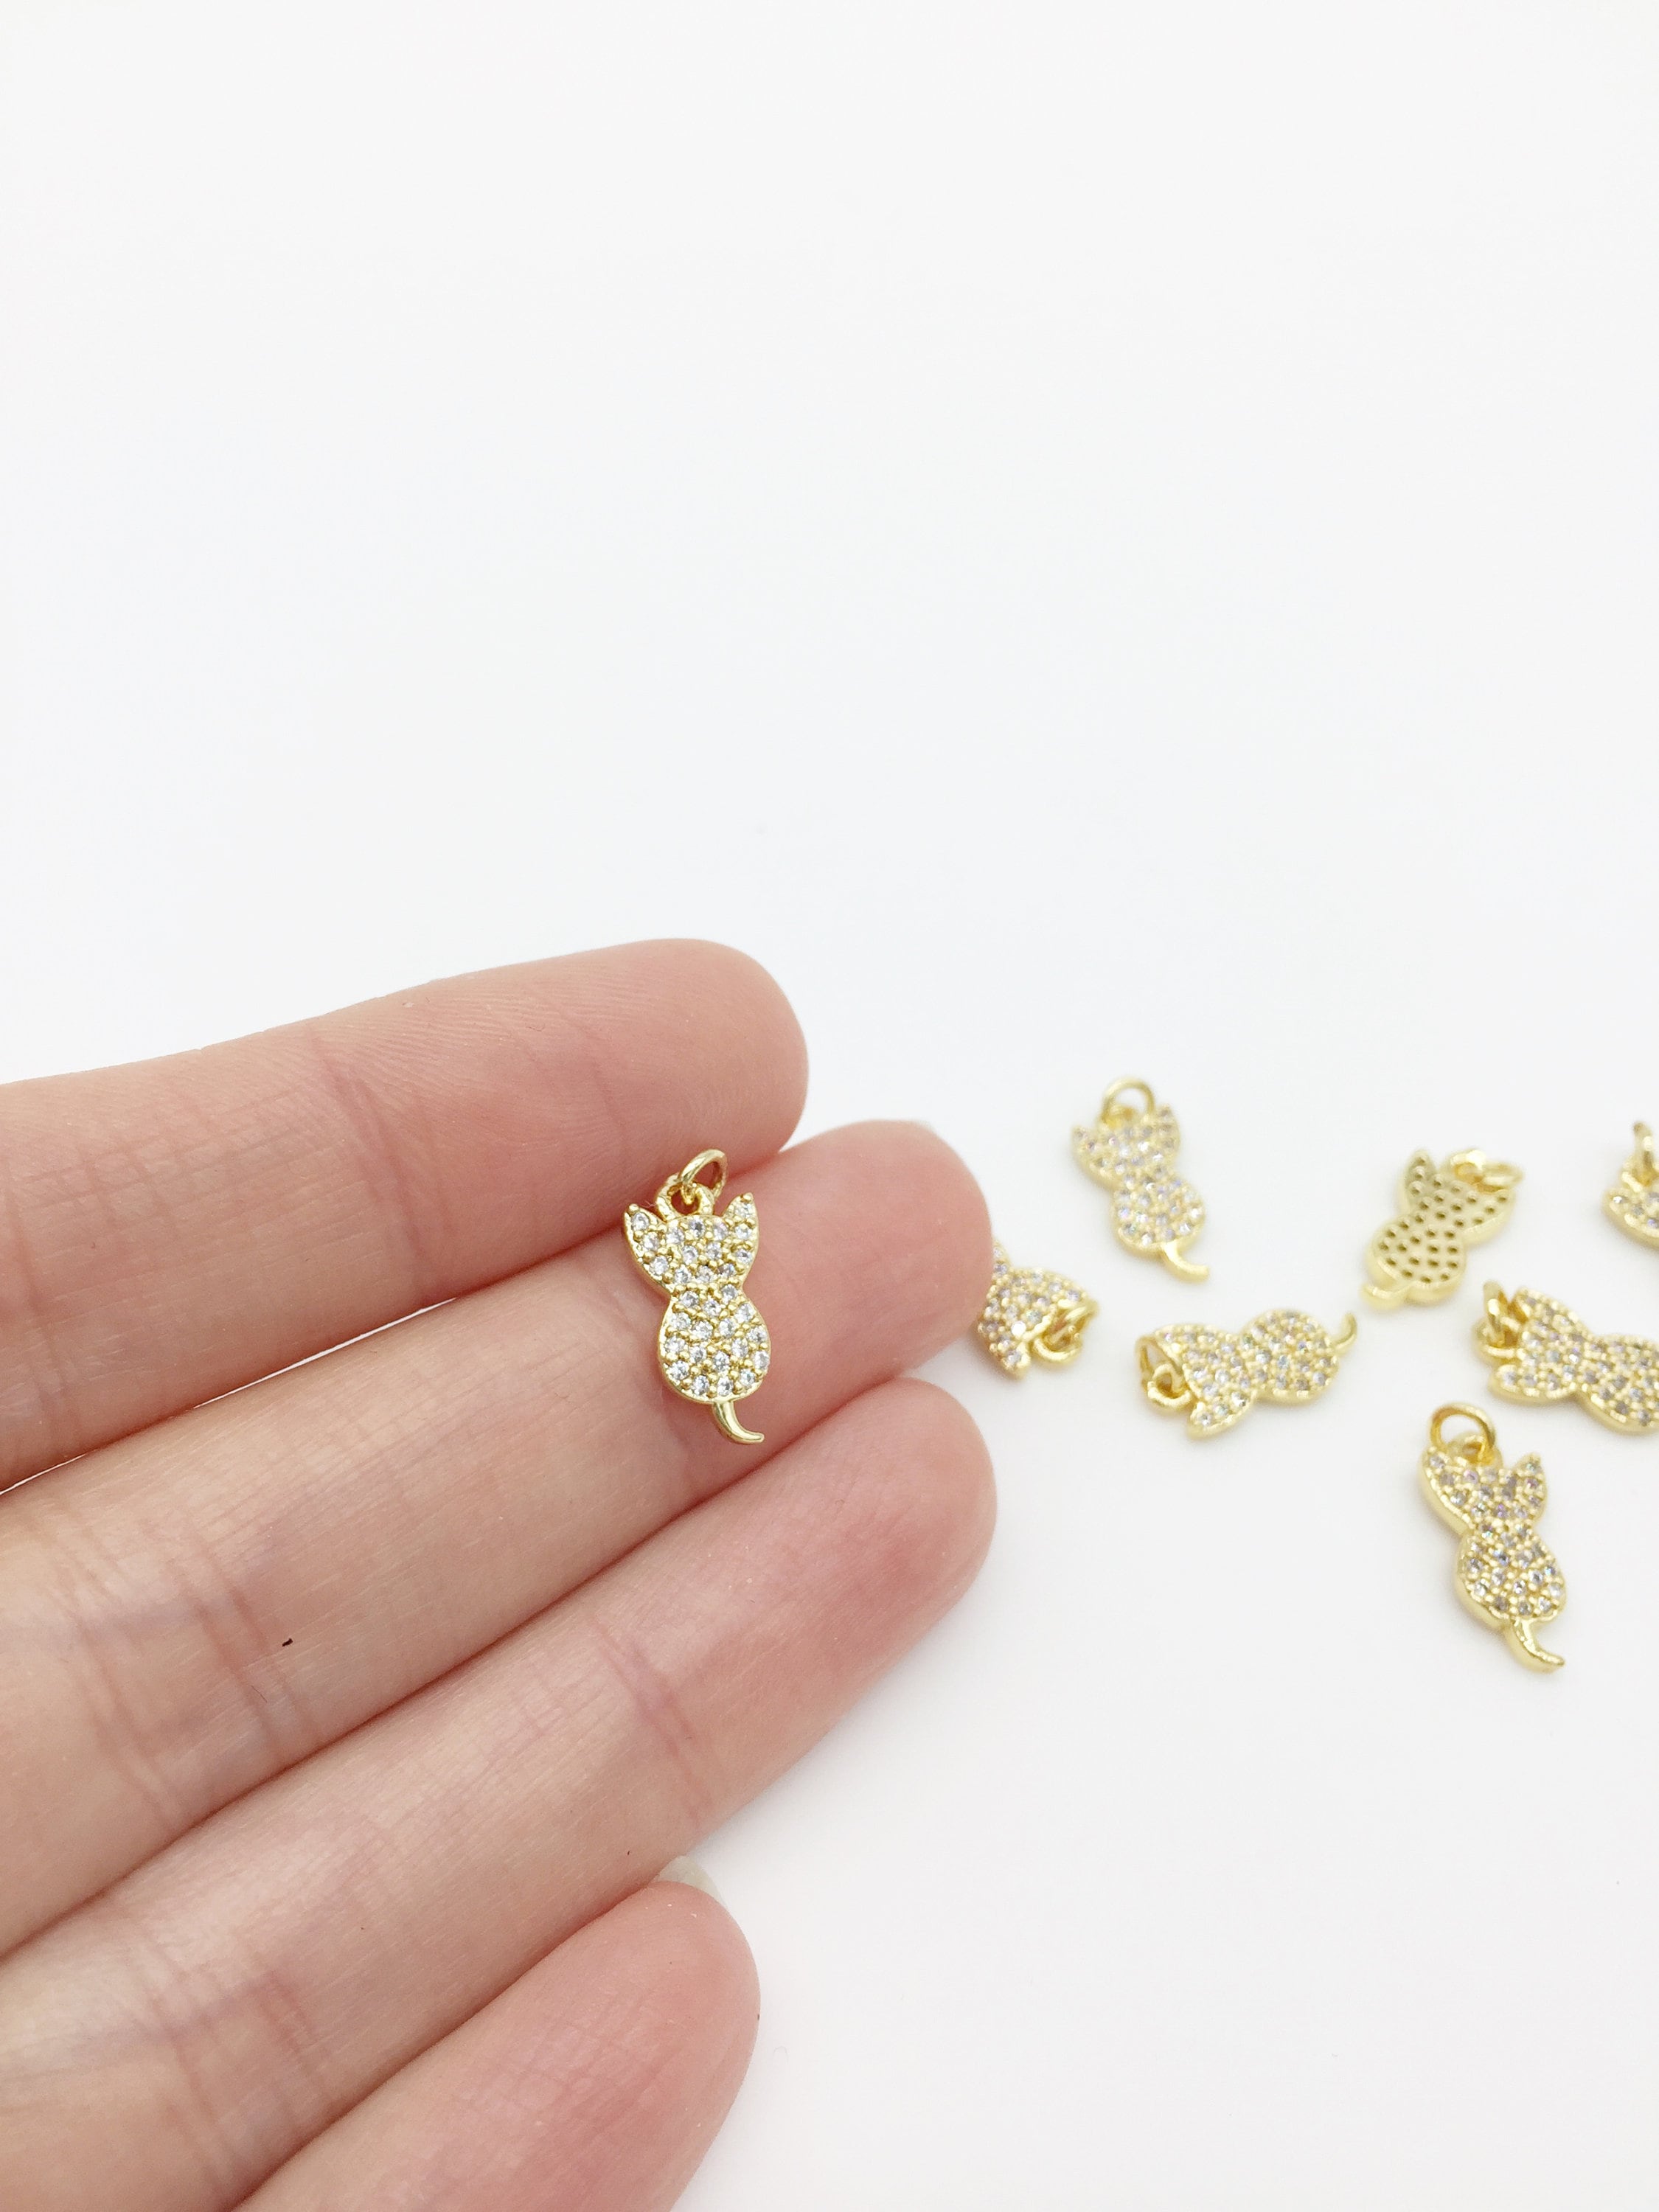 Latest Gold Earrings Designs For Women l Simple Jhumka Design For Girl l Small  Gold Earrings Designs - YouTube